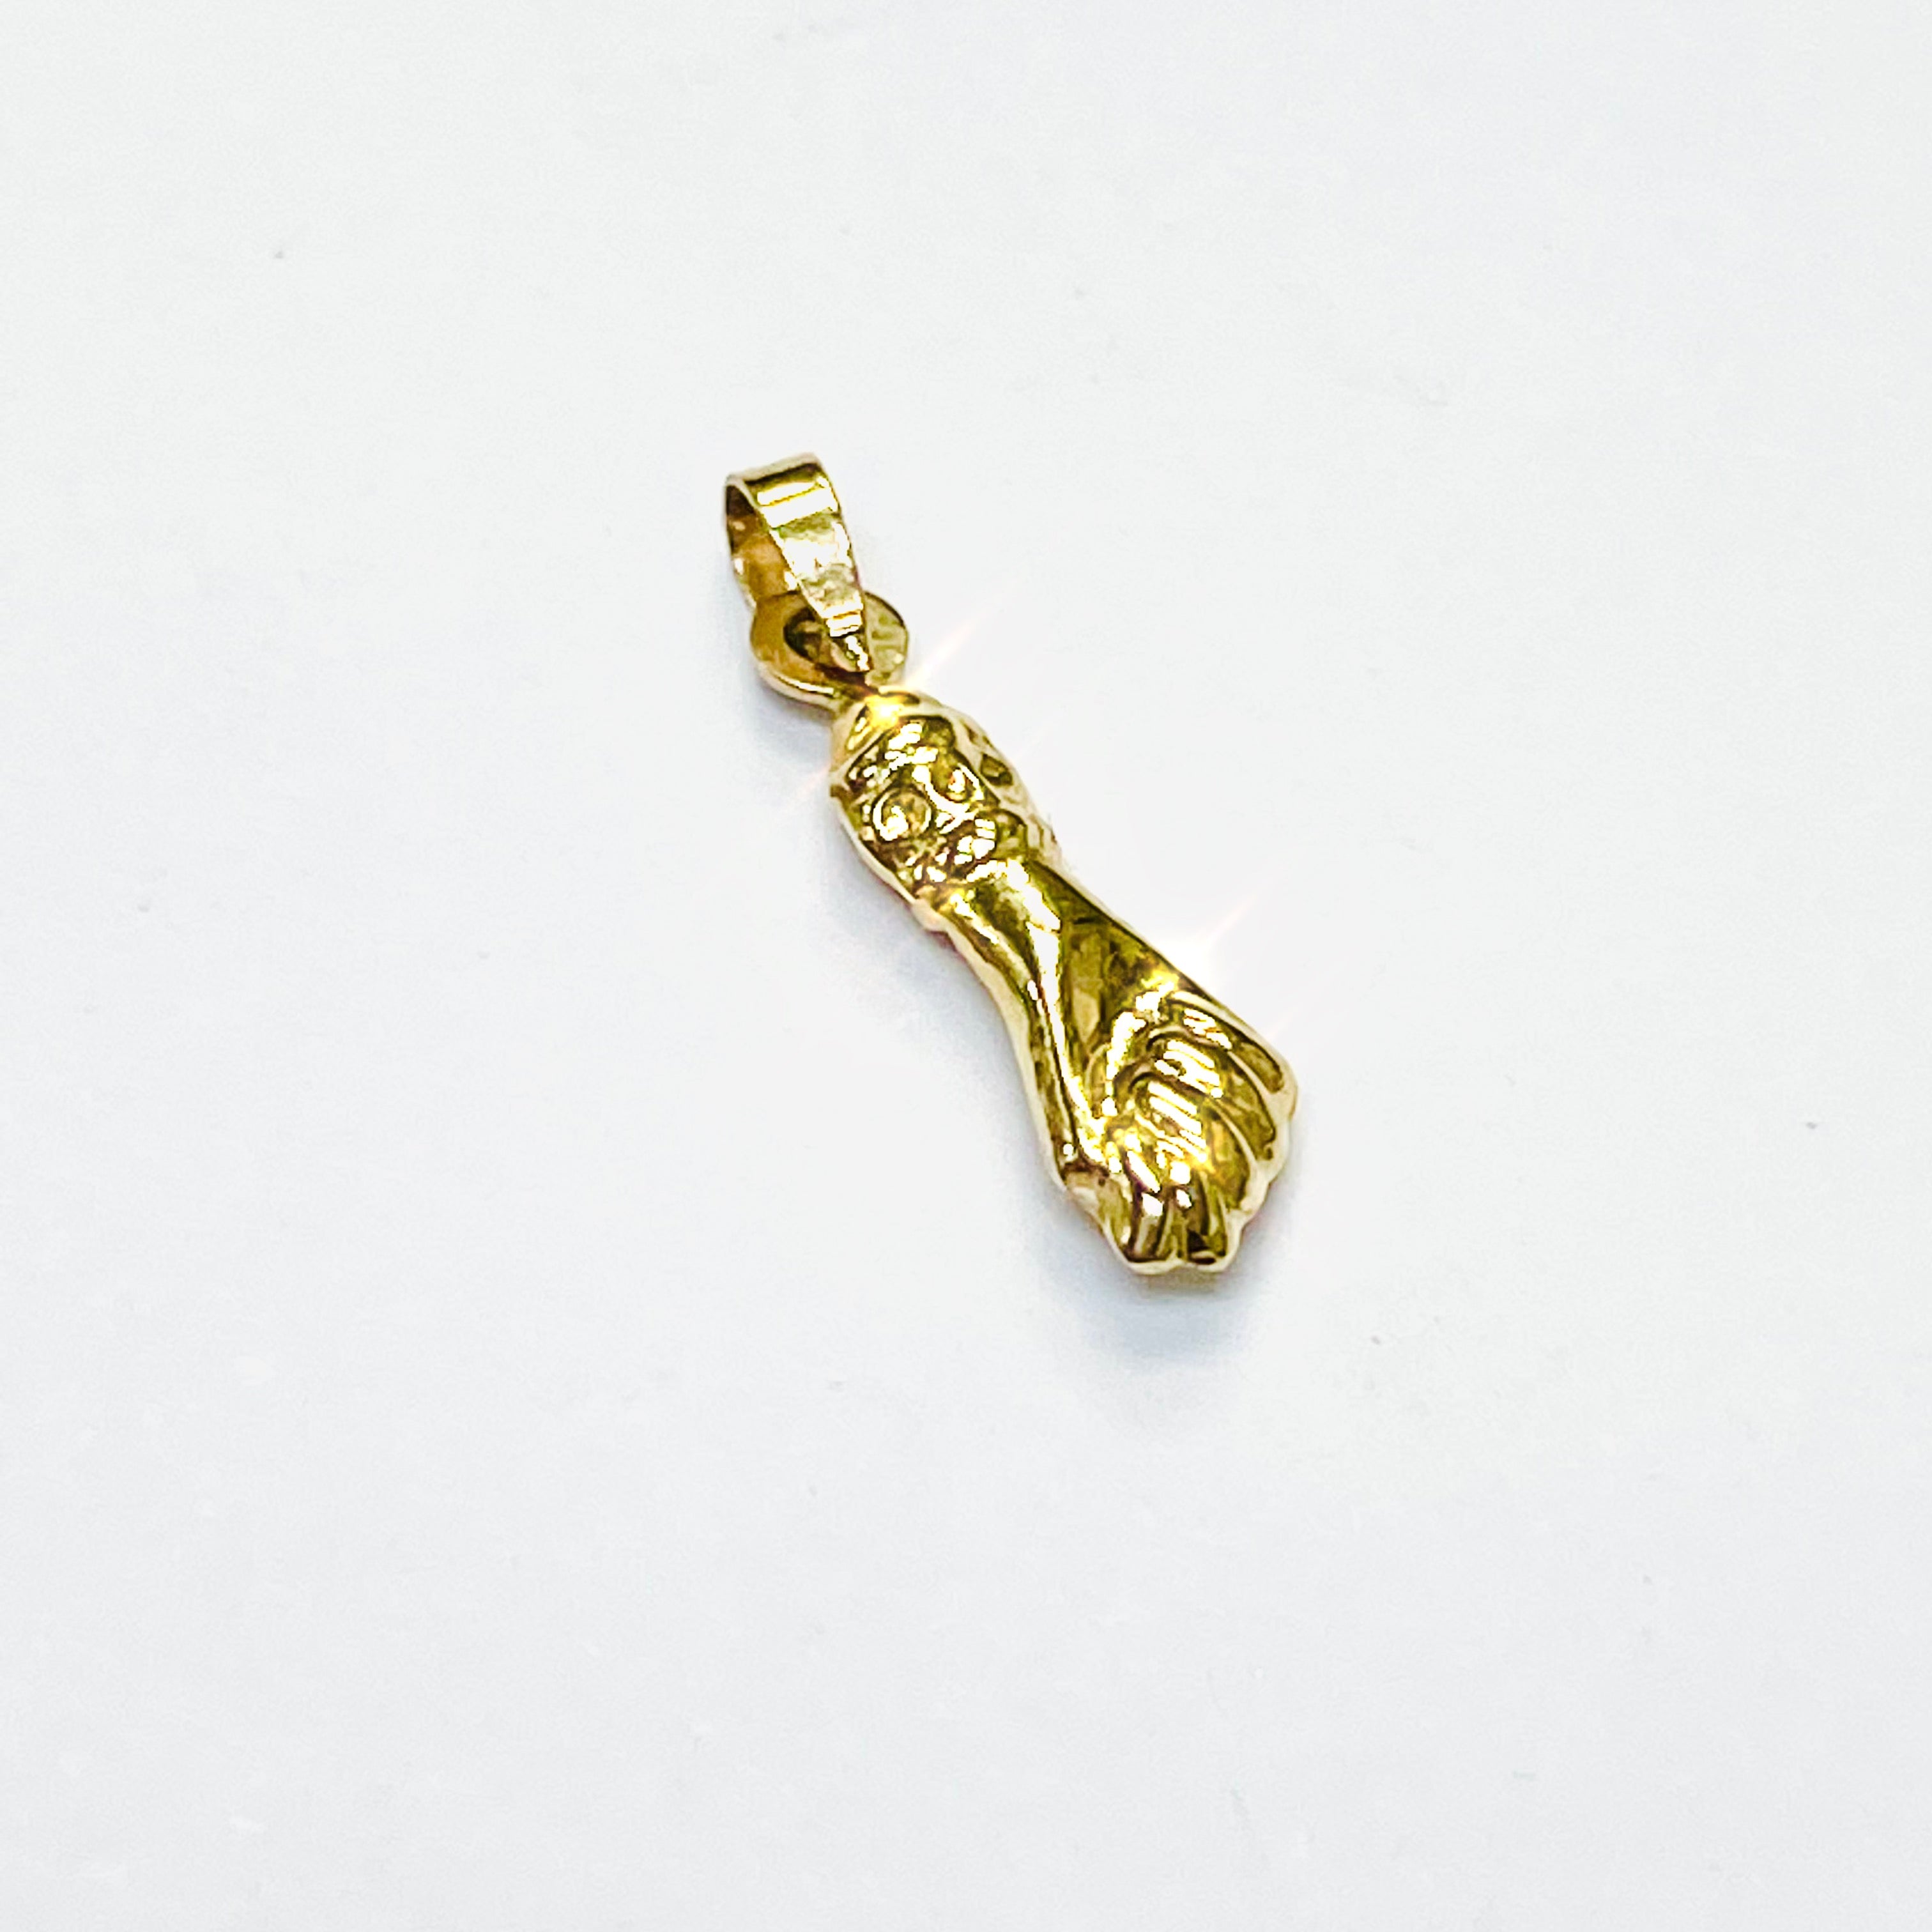 Mini 14K Yellow Gold Figa Fist Charm Pendant